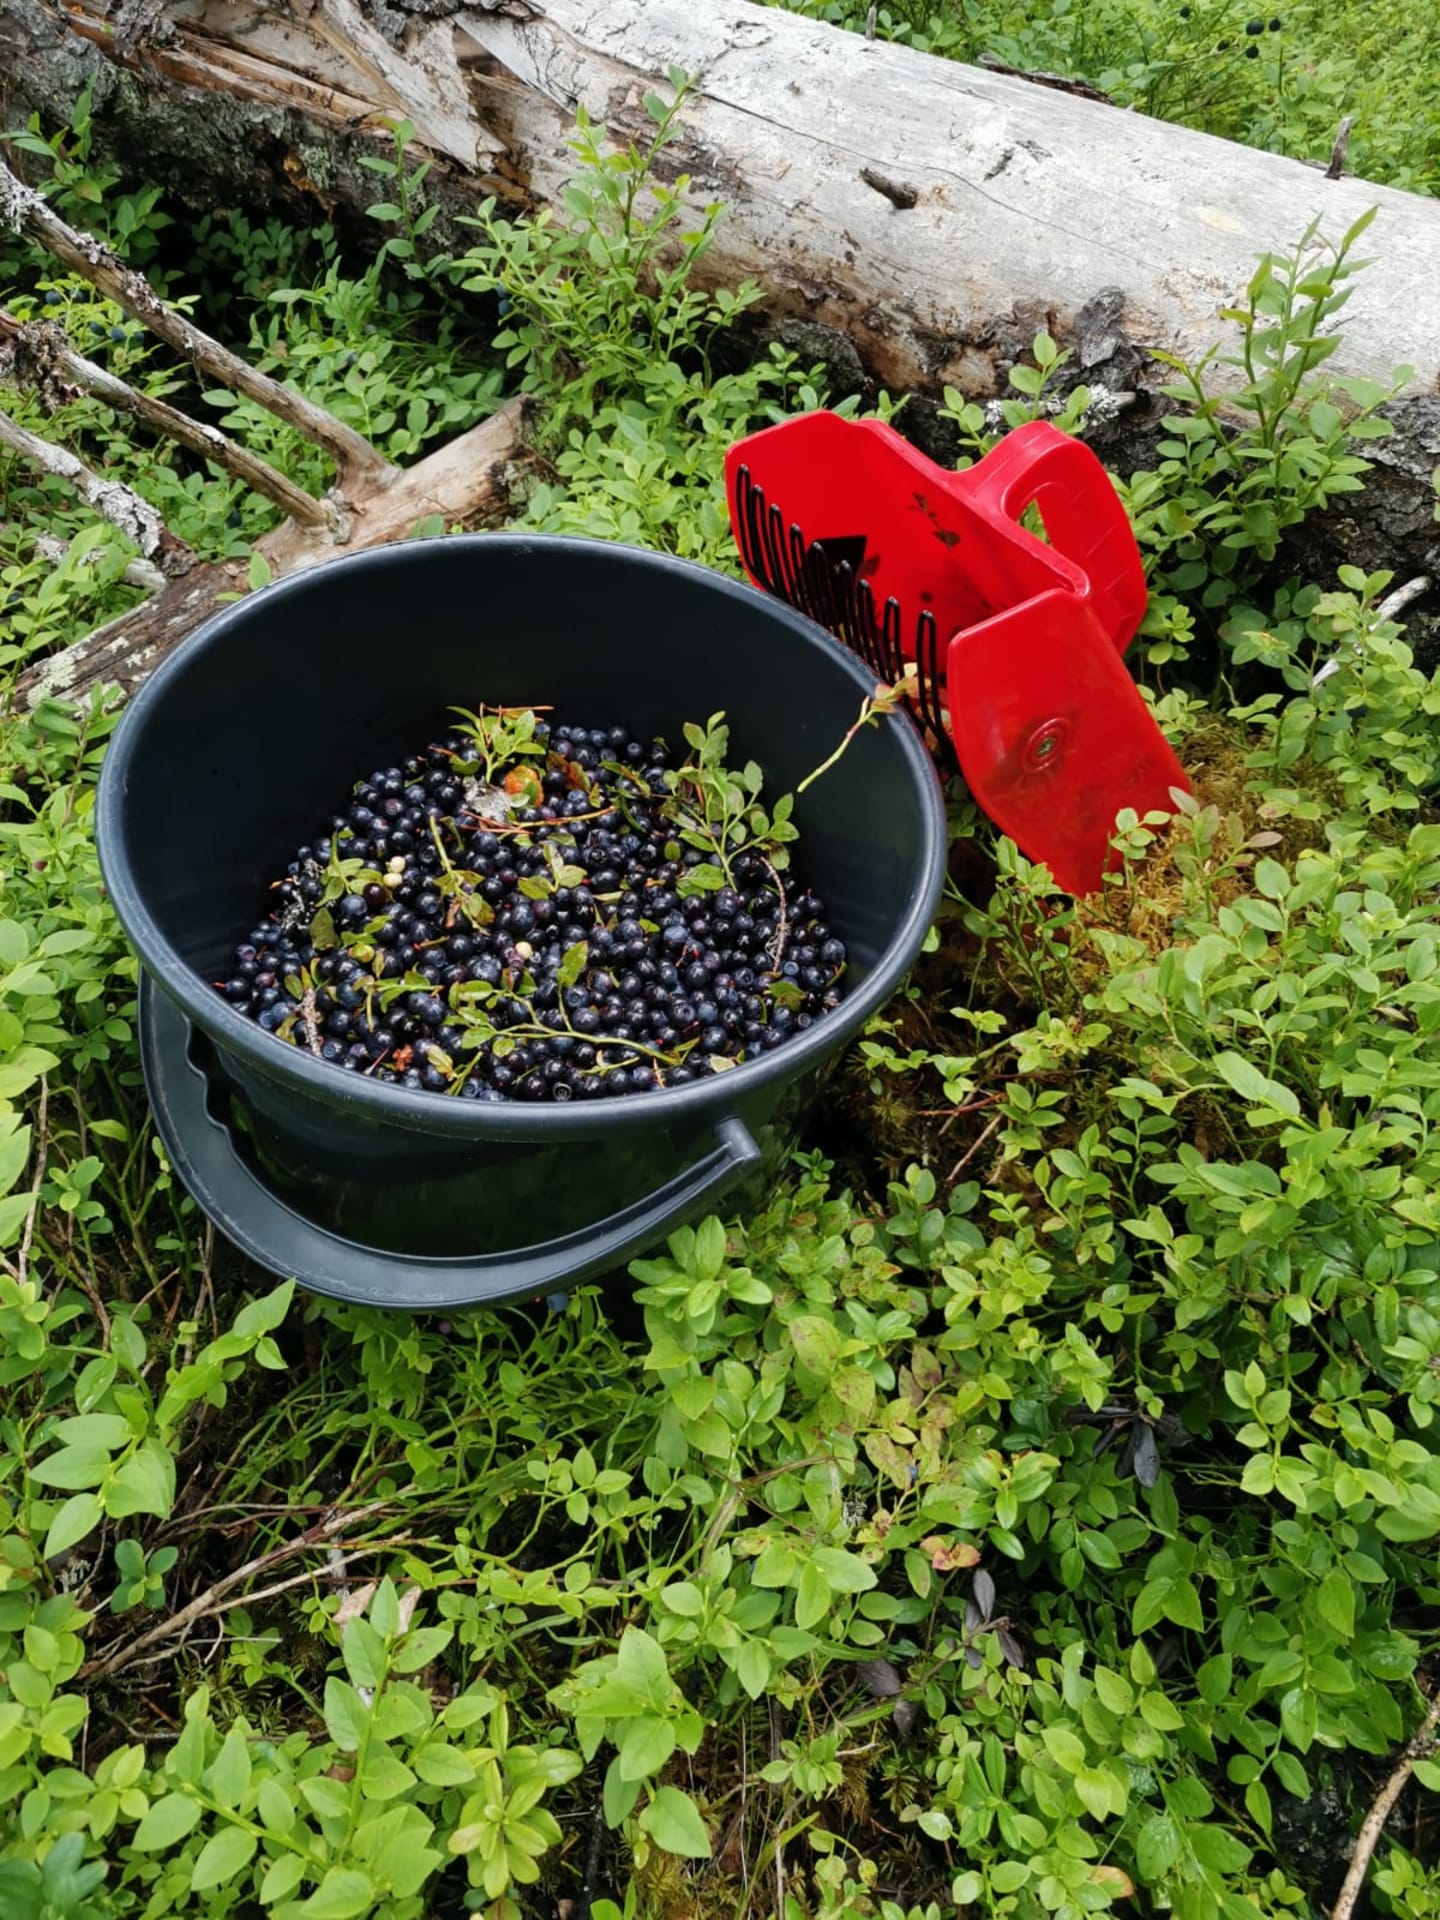 Picking berries